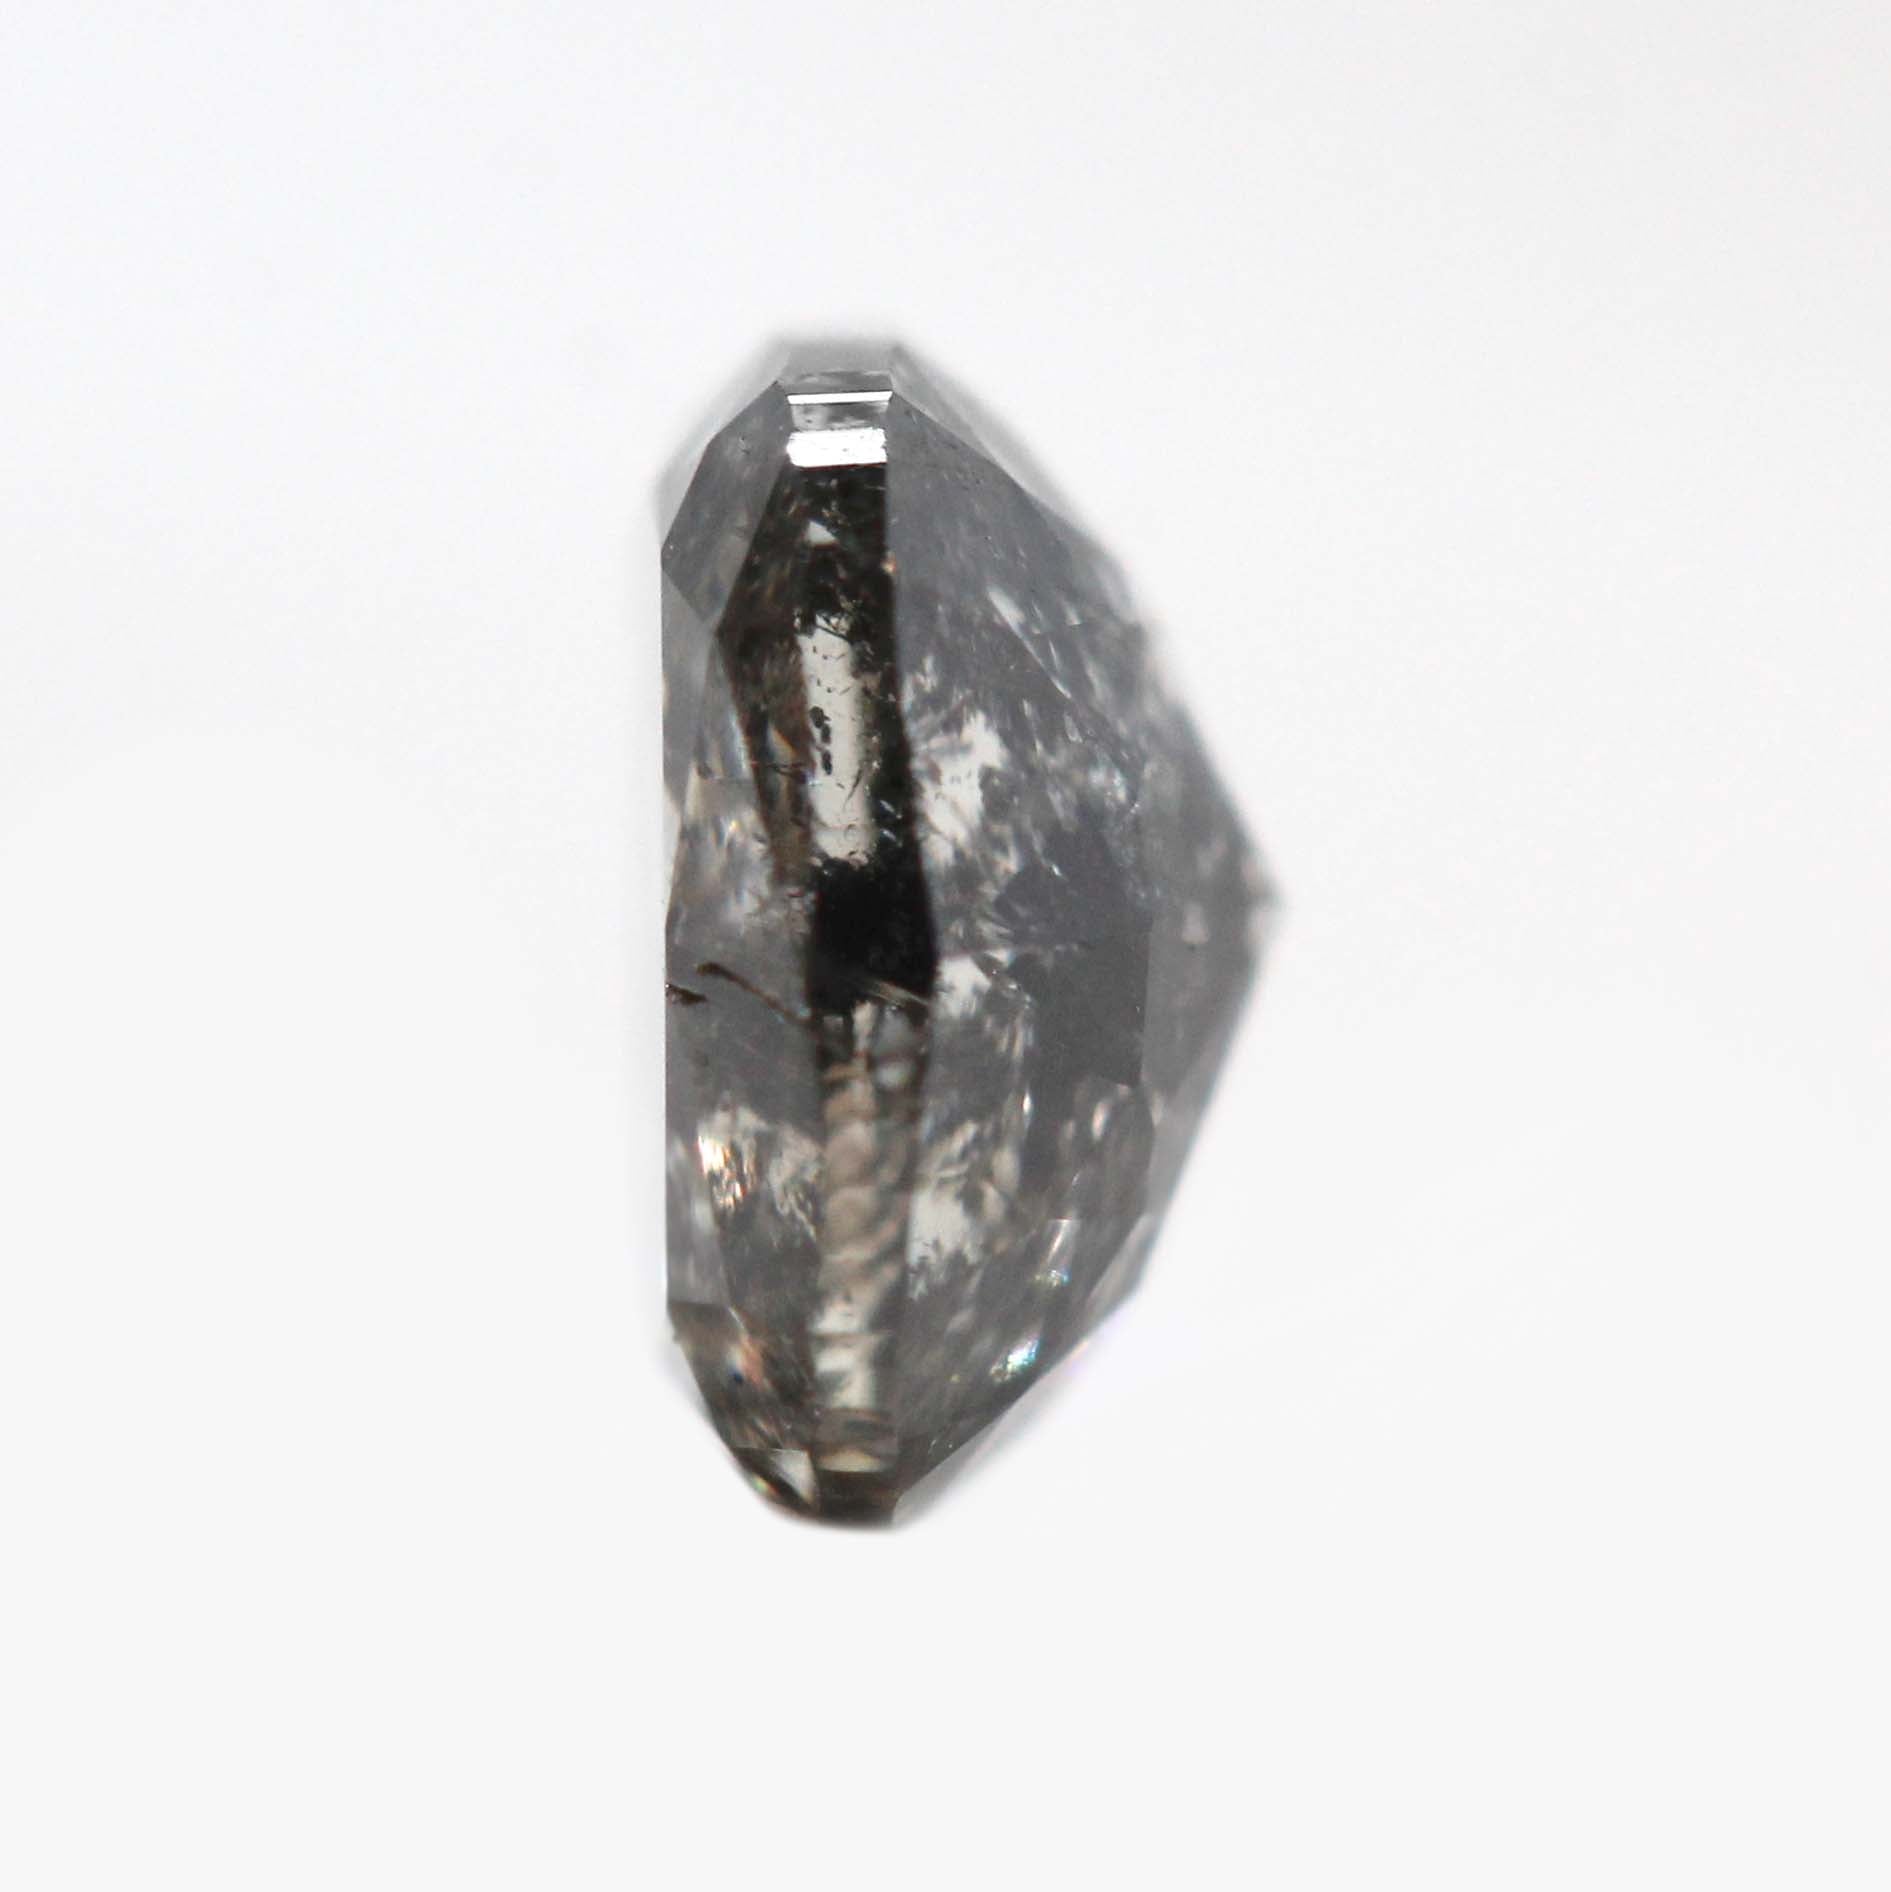 0.76 Carat Cushion Cut Dark Celestial Diamond for Custom Work - Inventory Code DCC076 - Midwinter Co. Alternative Bridal Rings and Modern Fine Jewelry